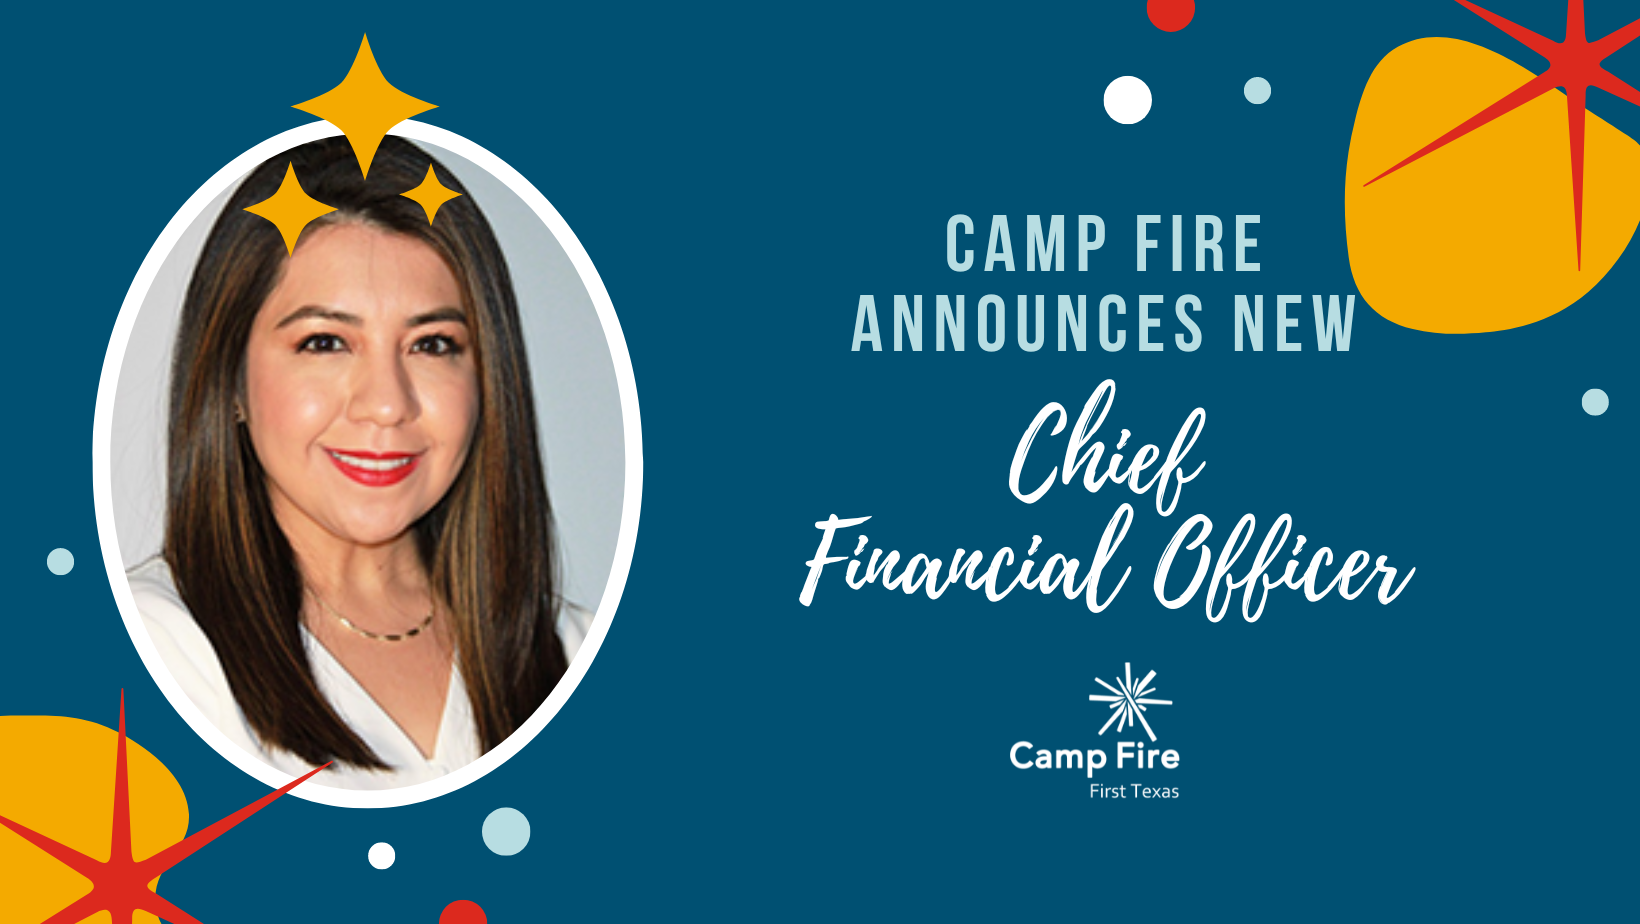 Camp Fire Announces New Chief Financial Officer, a Camp Fire First Texas blog